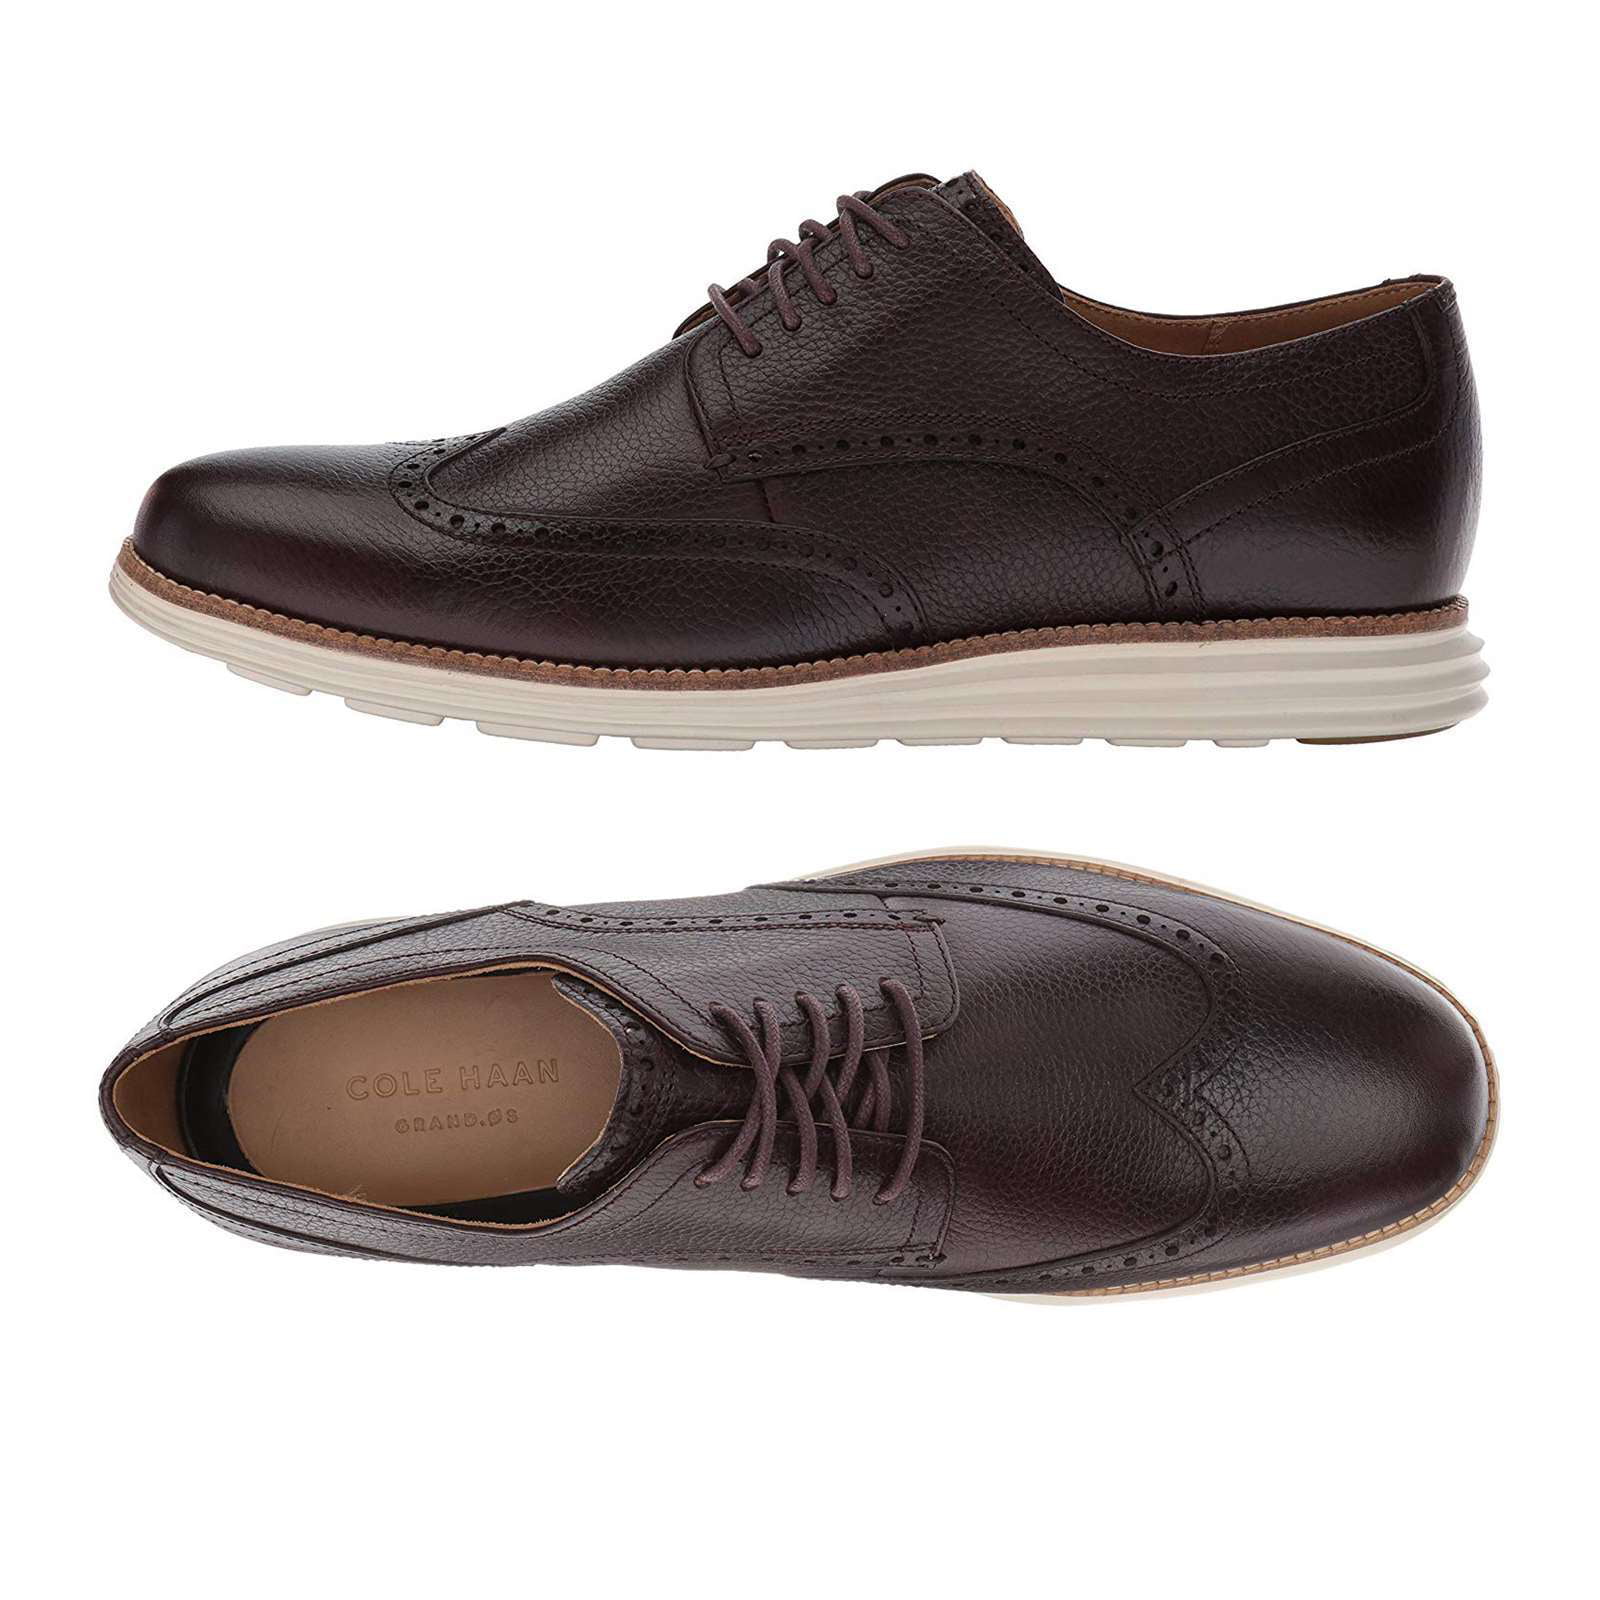 men's original grand shortwing oxford shoe